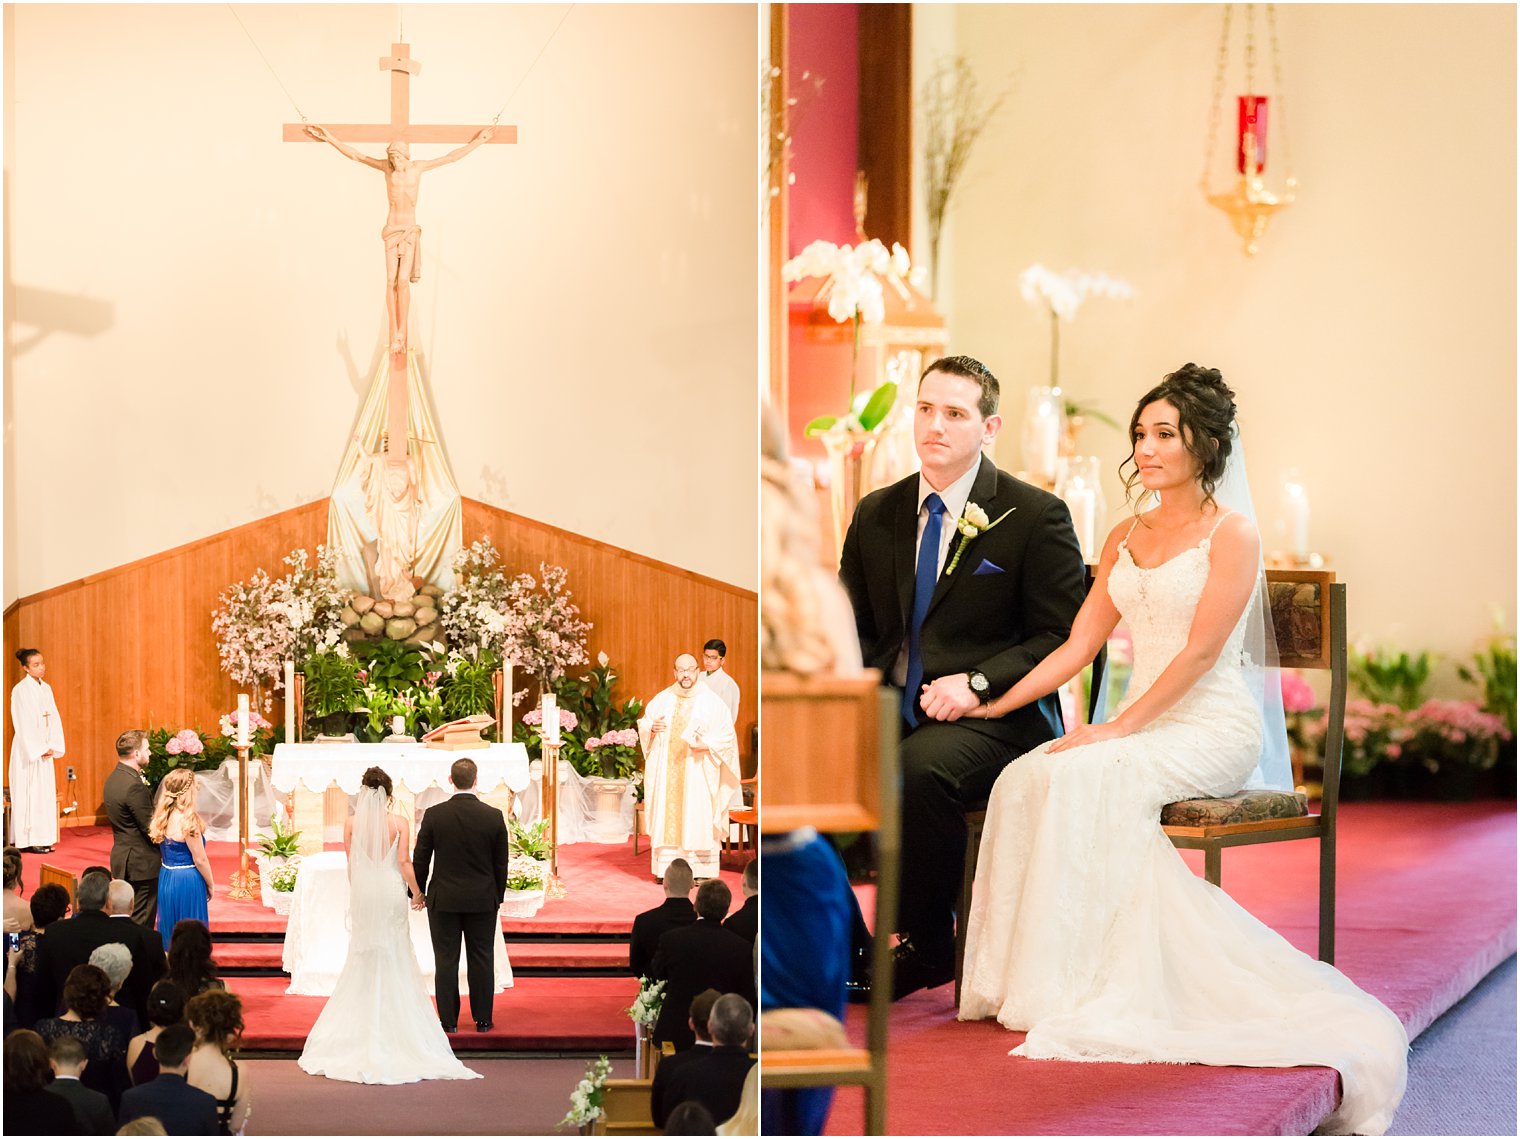 St. Helena's Church Wedding Ceremony in Edison, NJ